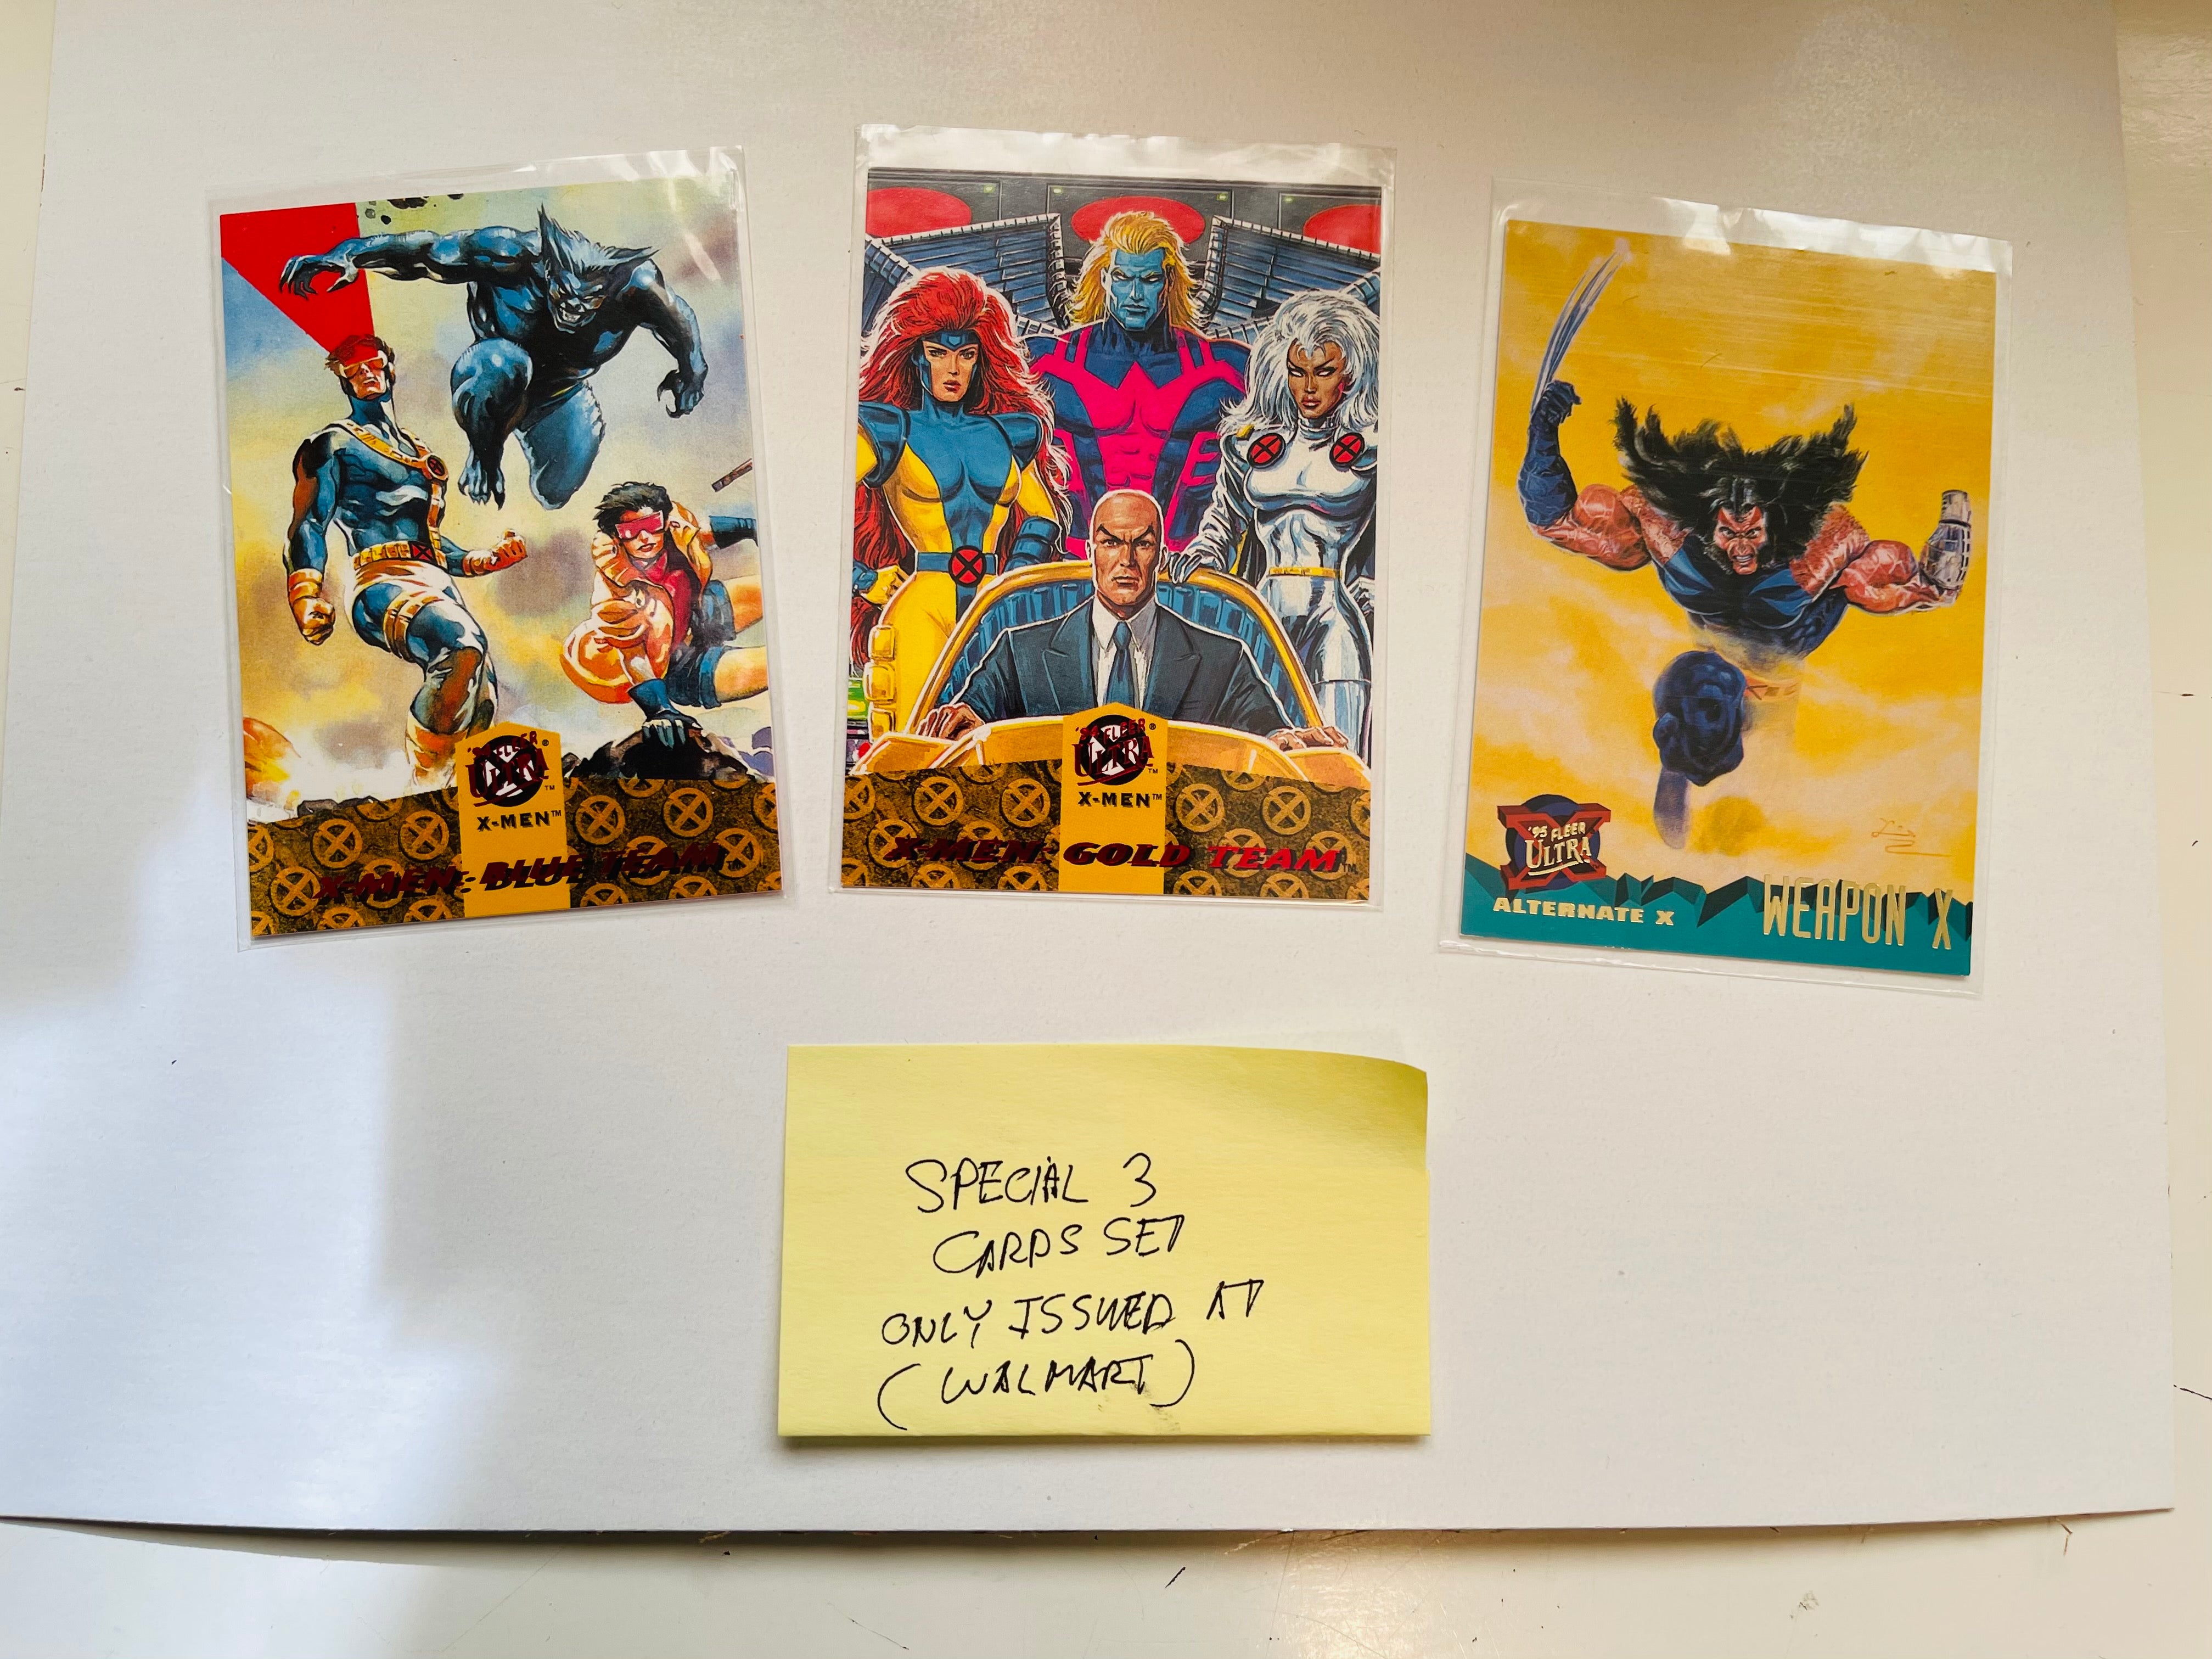 X-Men Gold team Walmart exclusive plus promo card